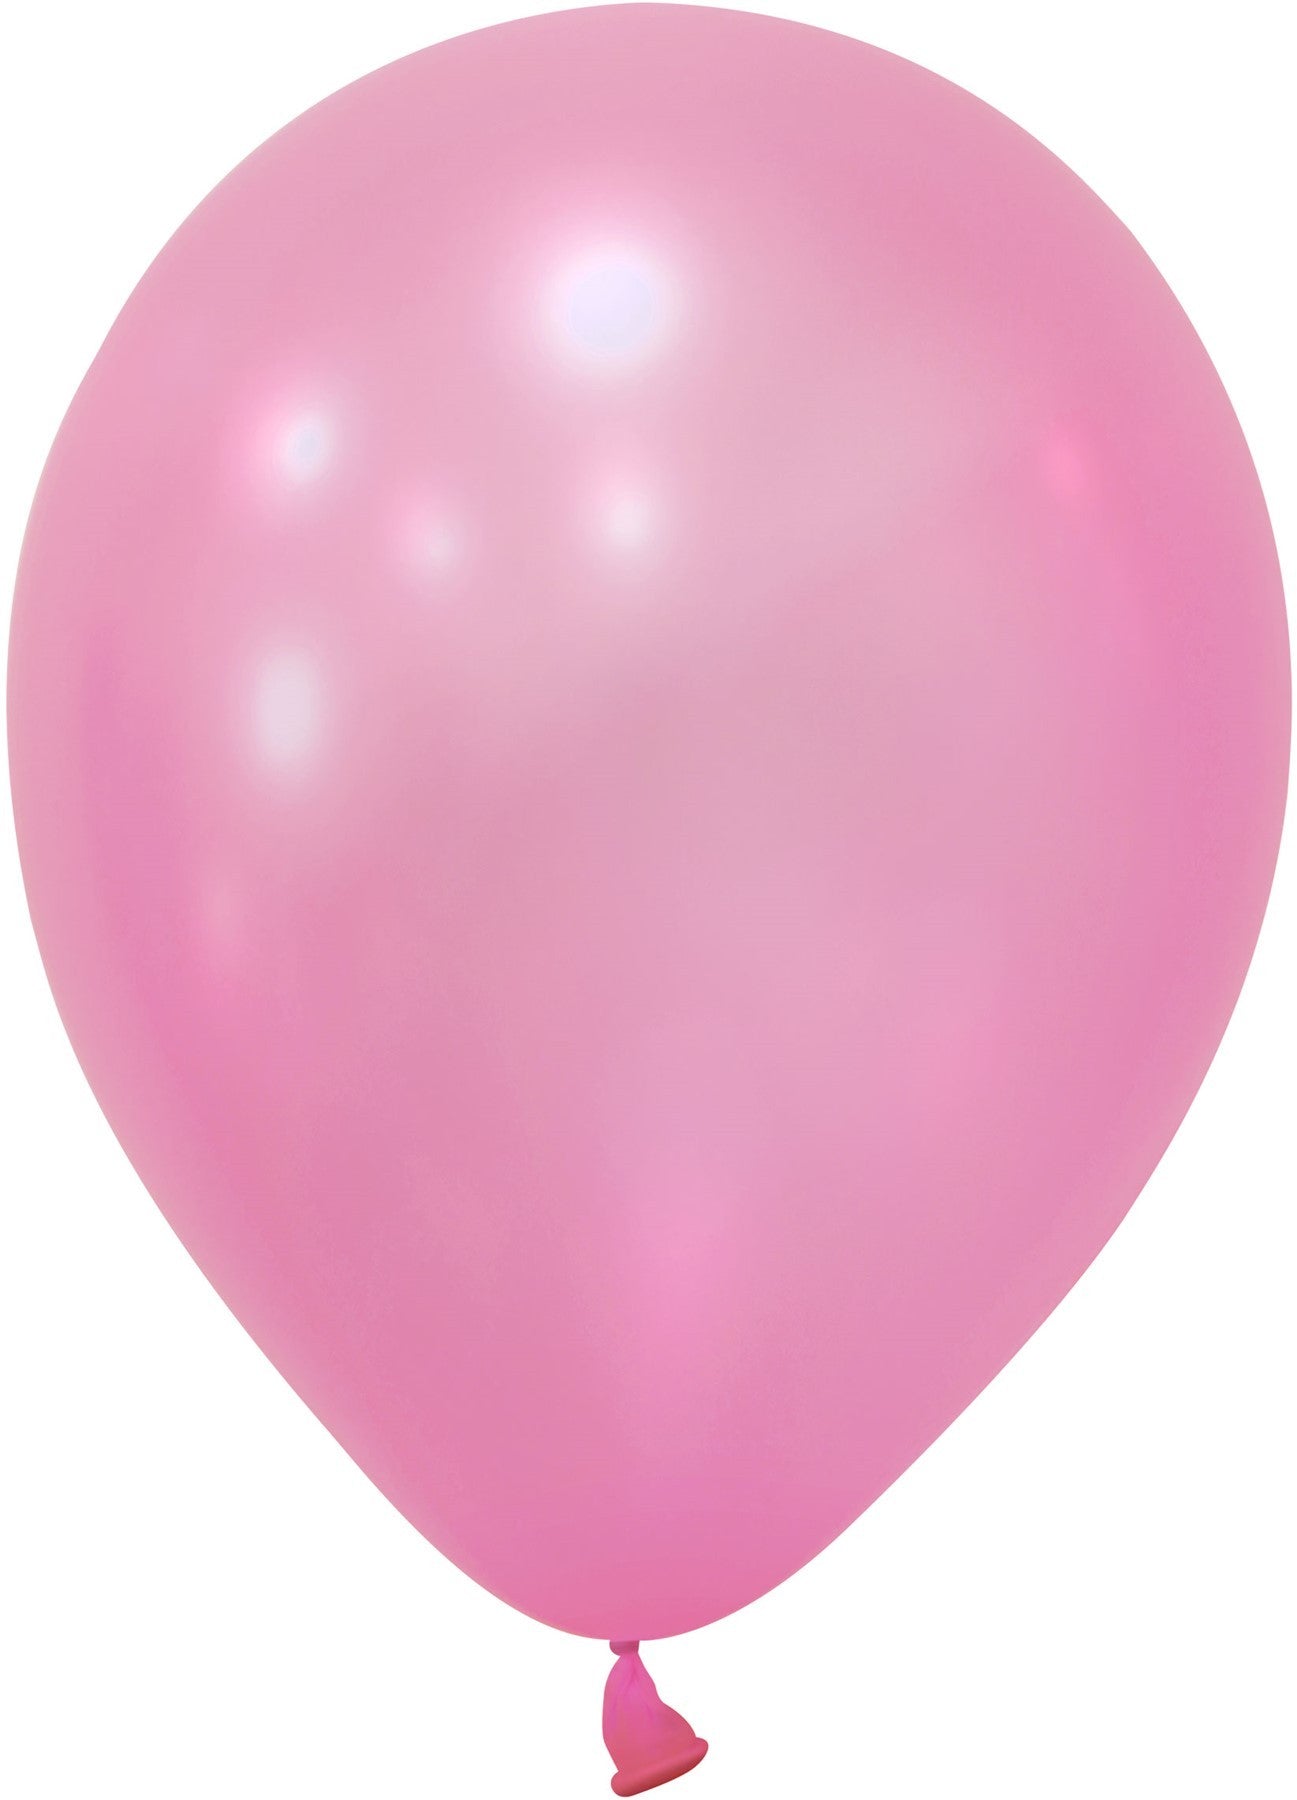 View Pink Metallic Latex Balloon 12 inch Pk 100 information